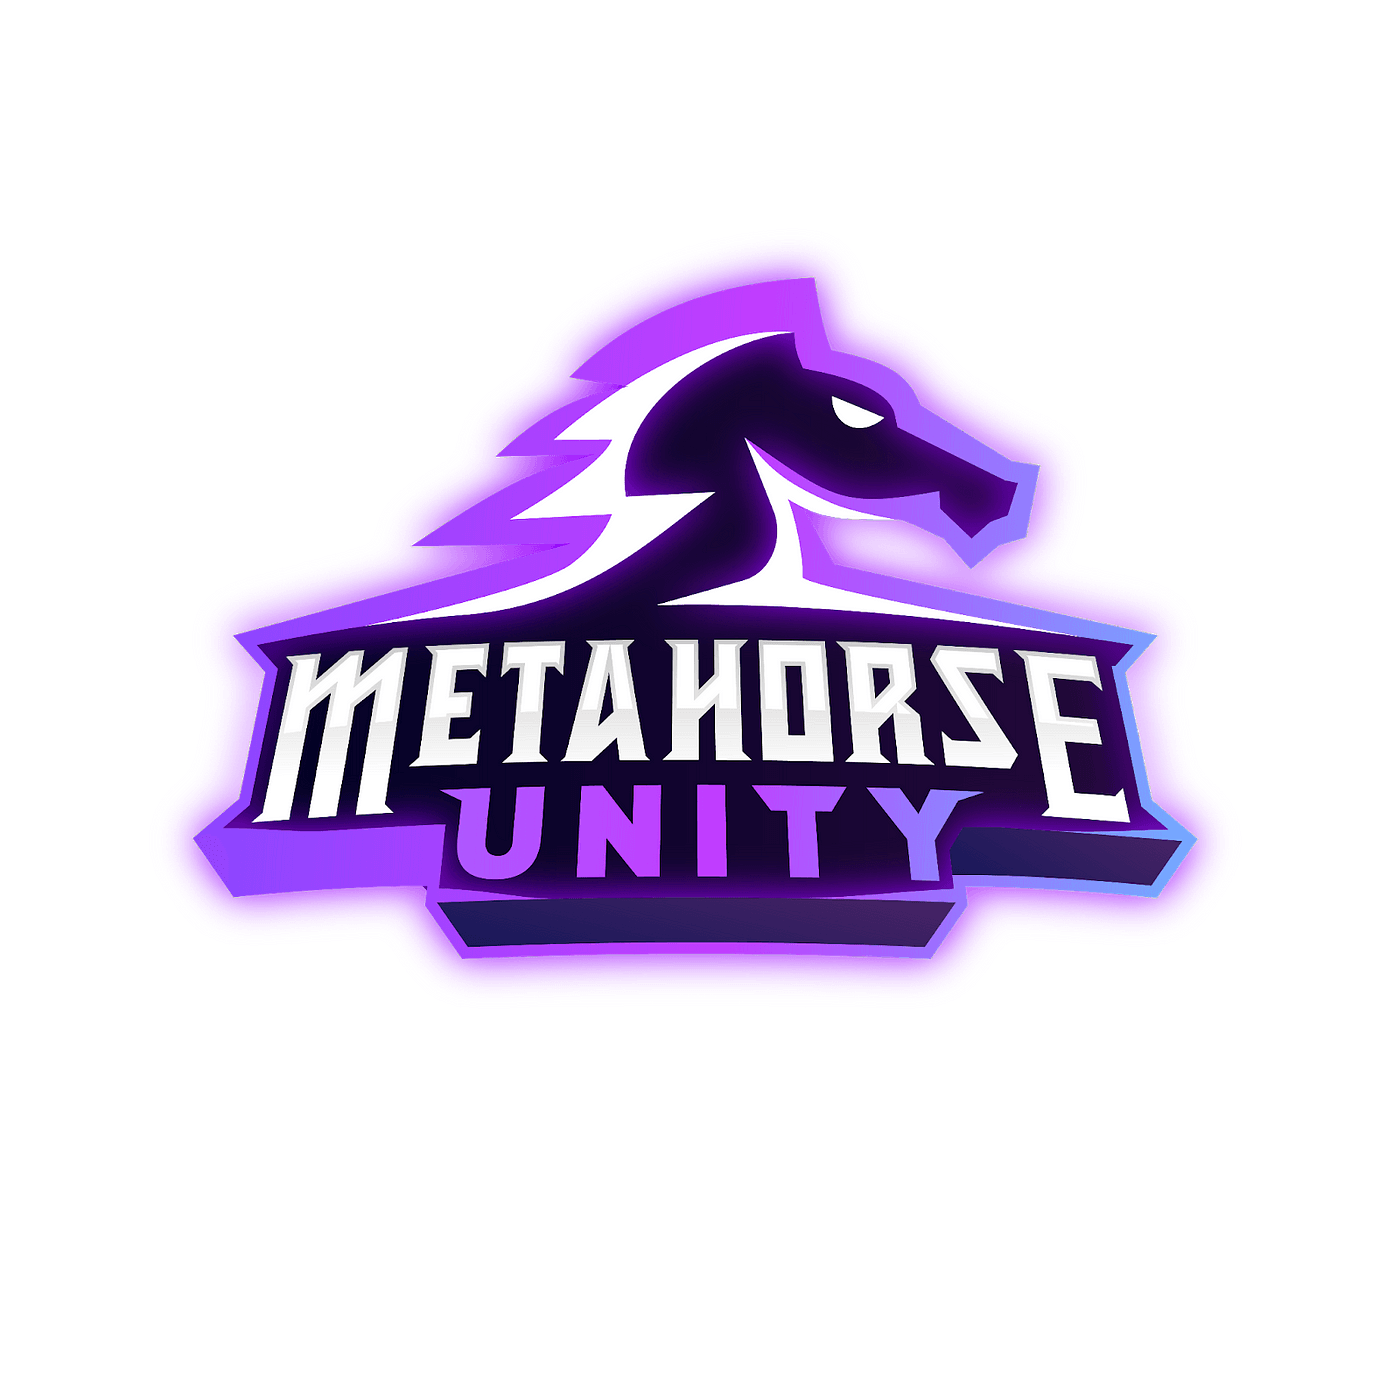 Metahorse Unity